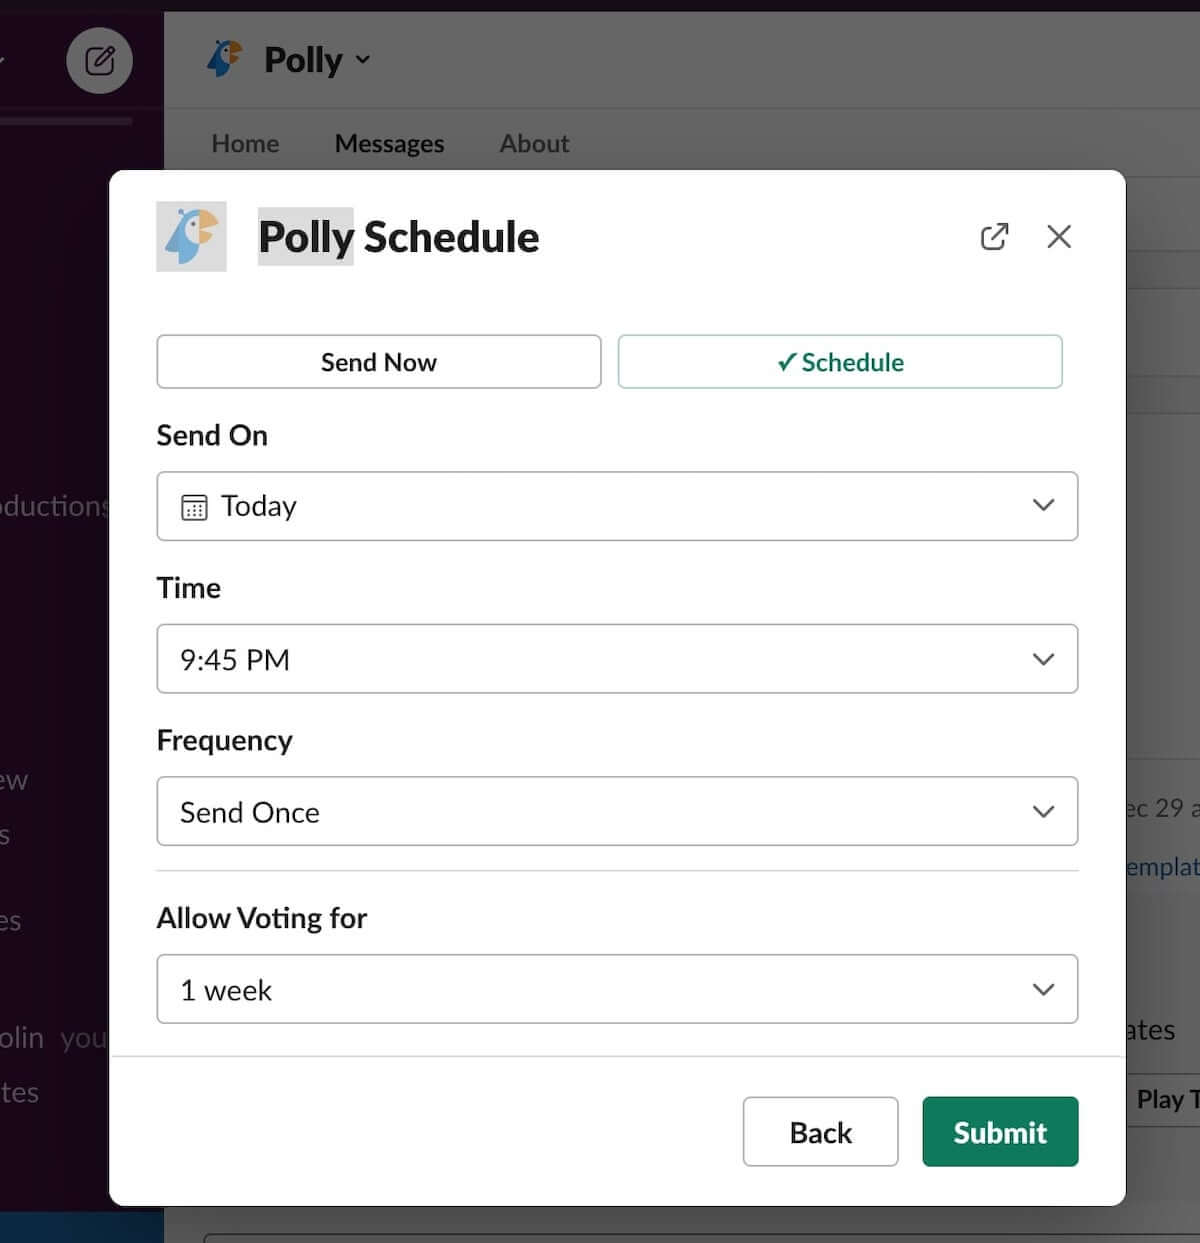 Slack poll: Polly Schedule screenshot in Slack